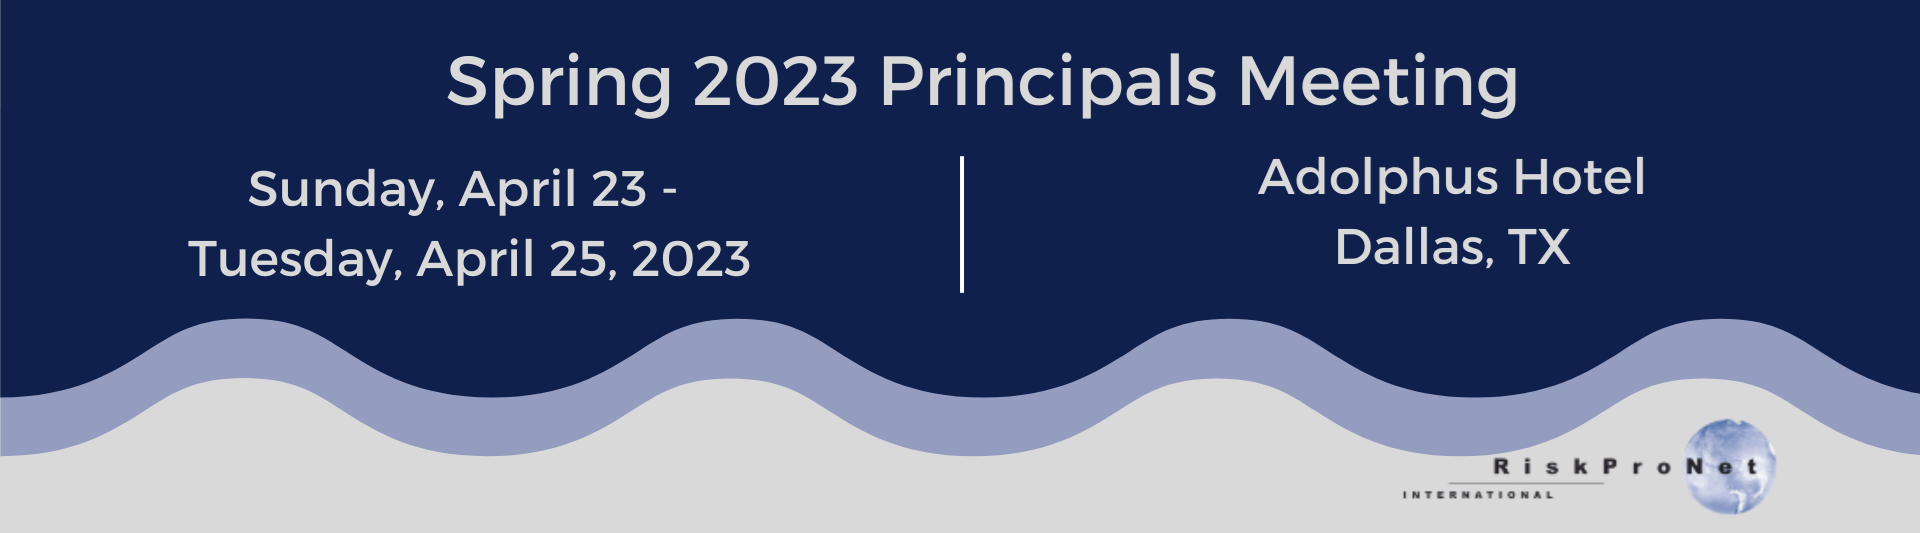 Spring 2023 Principals Meeting